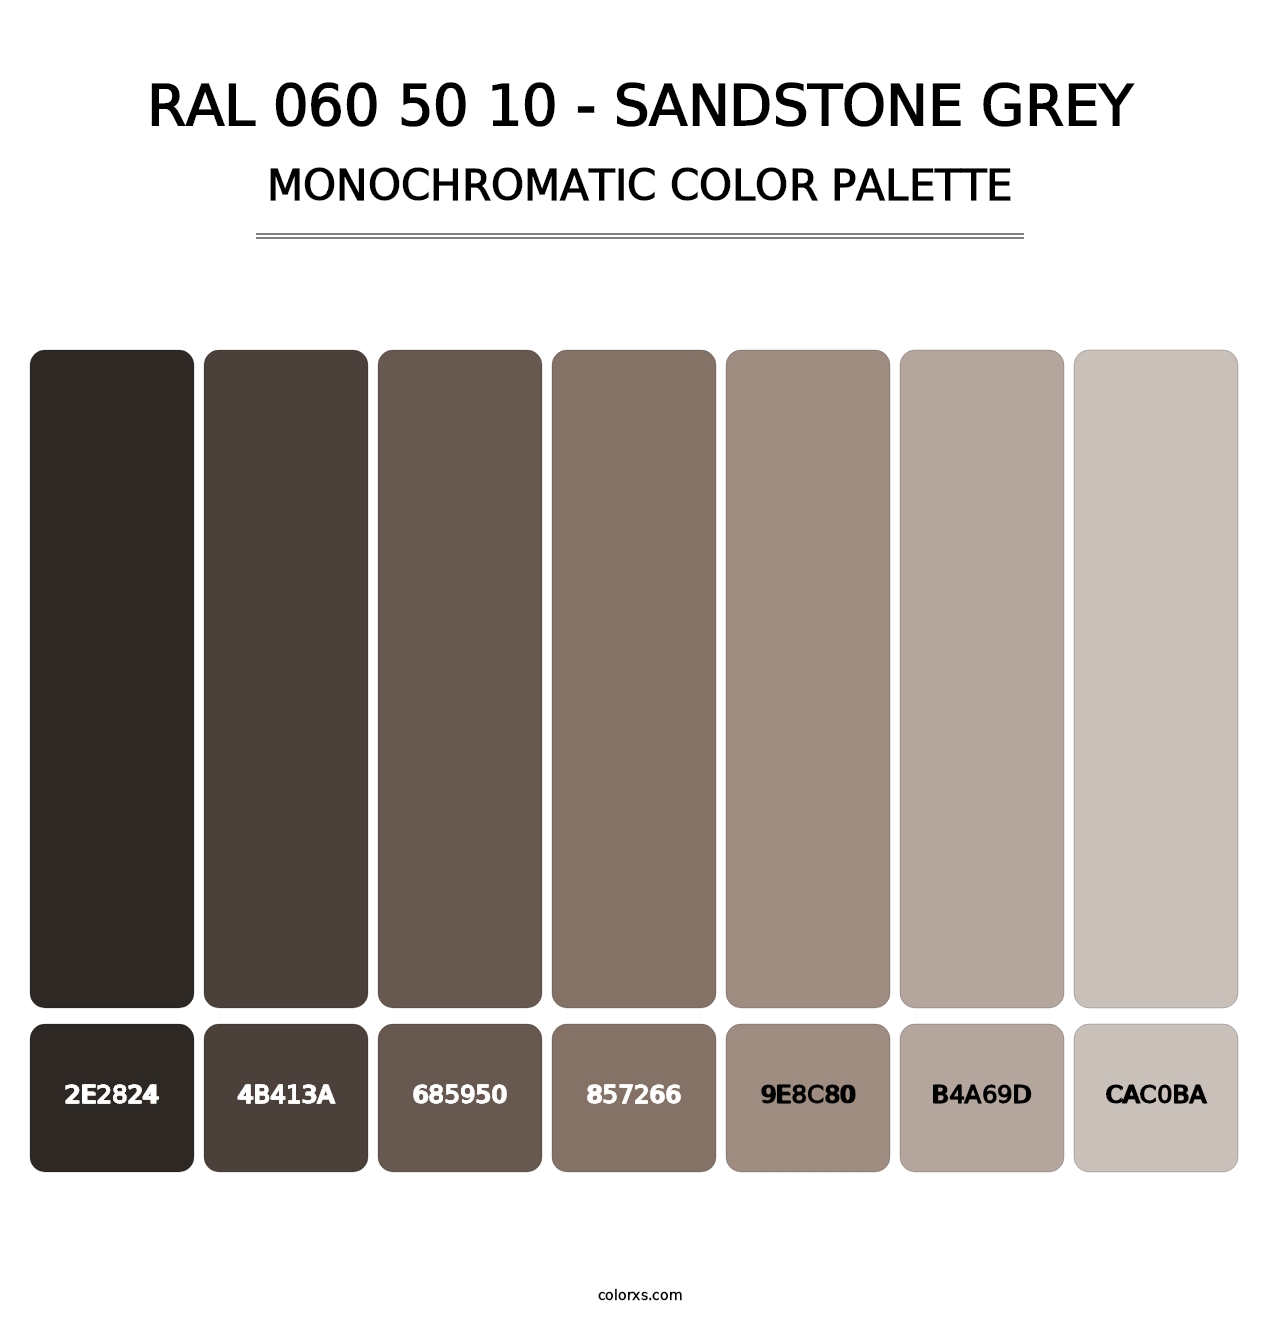 RAL 060 50 10 - Sandstone Grey - Monochromatic Color Palette